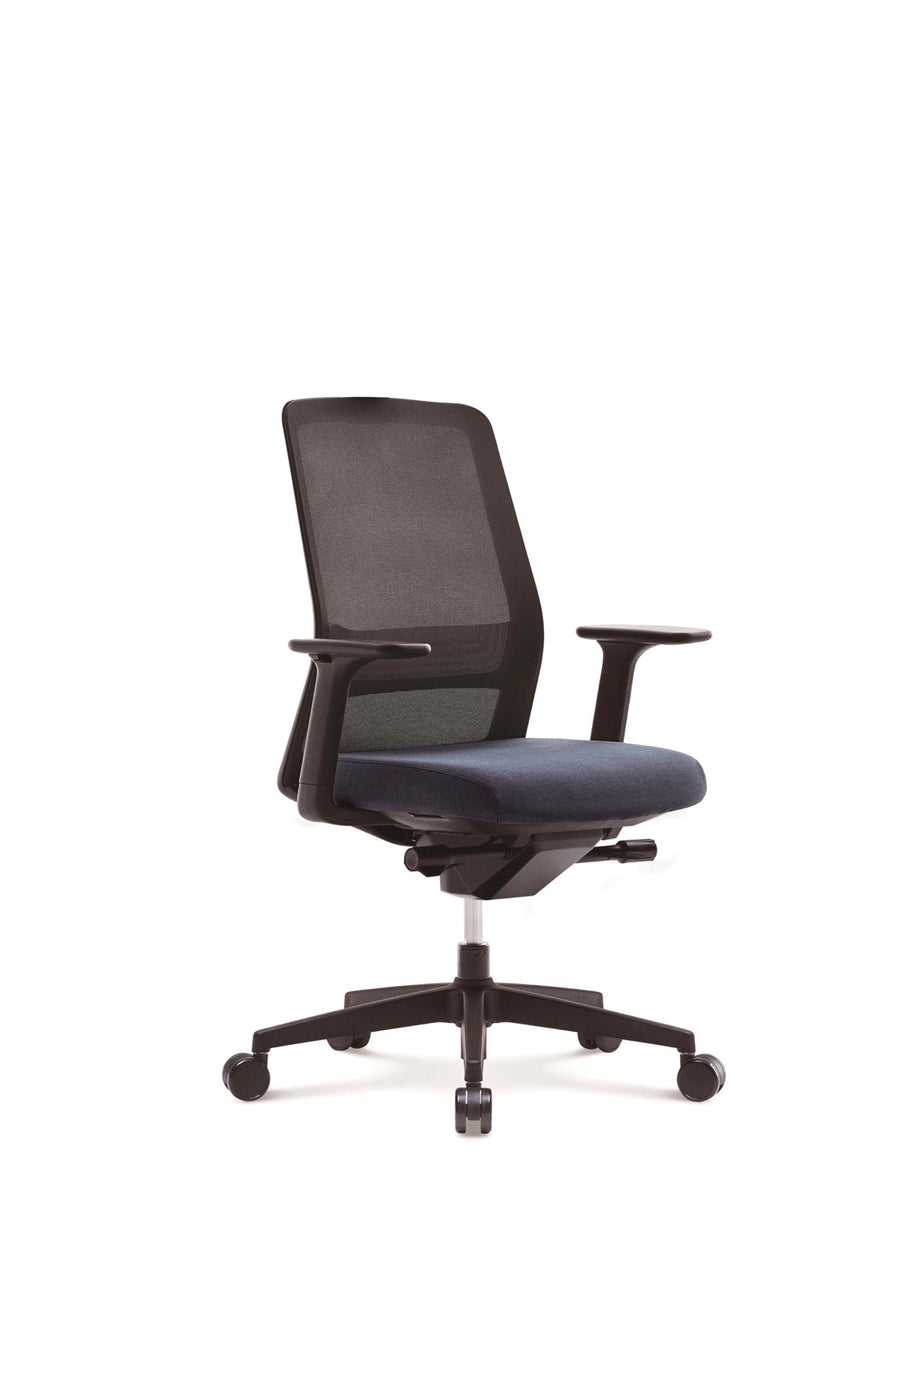 FURSYS SIDIZ T40 Black Frame Home Office Desk Chair - SIHOO AustraliaFURSYS SIDIZ T40 Black Frame Home Office Desk Chair